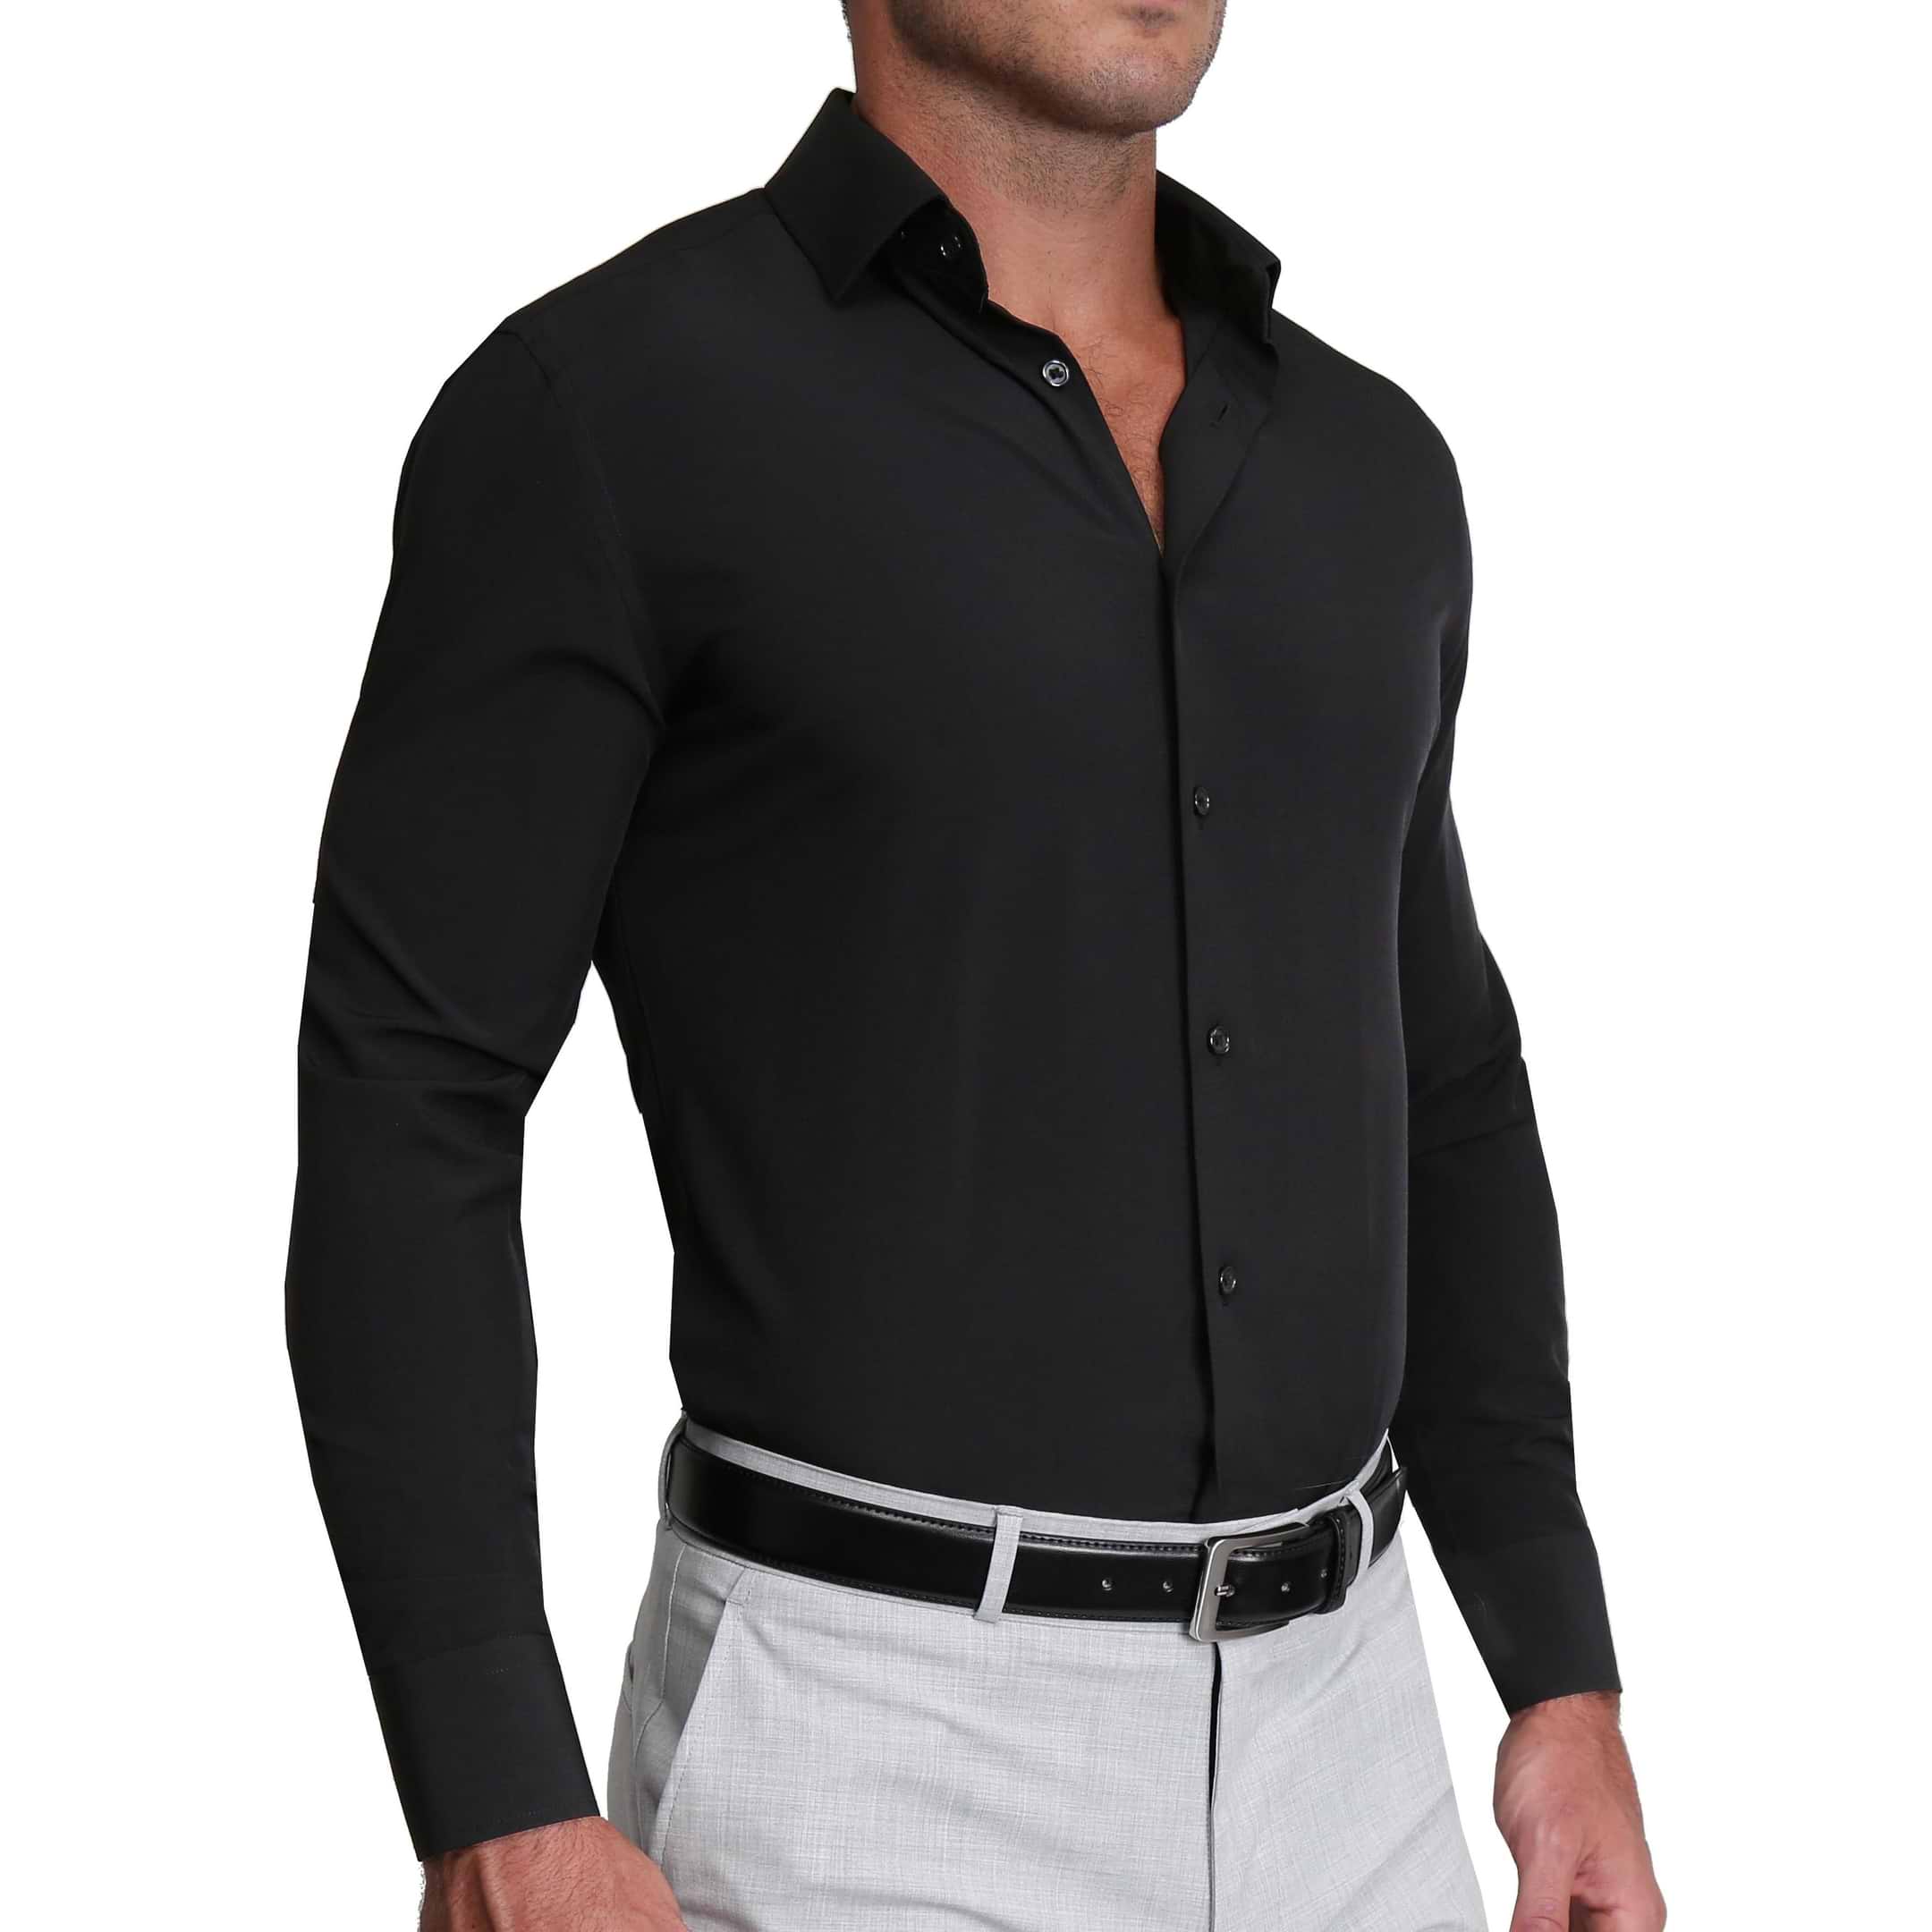 Men elegant black shirt black trouser for office wear, mens formal shirt  and pants formal wear black pant with black shirt gift for him -   Portugal